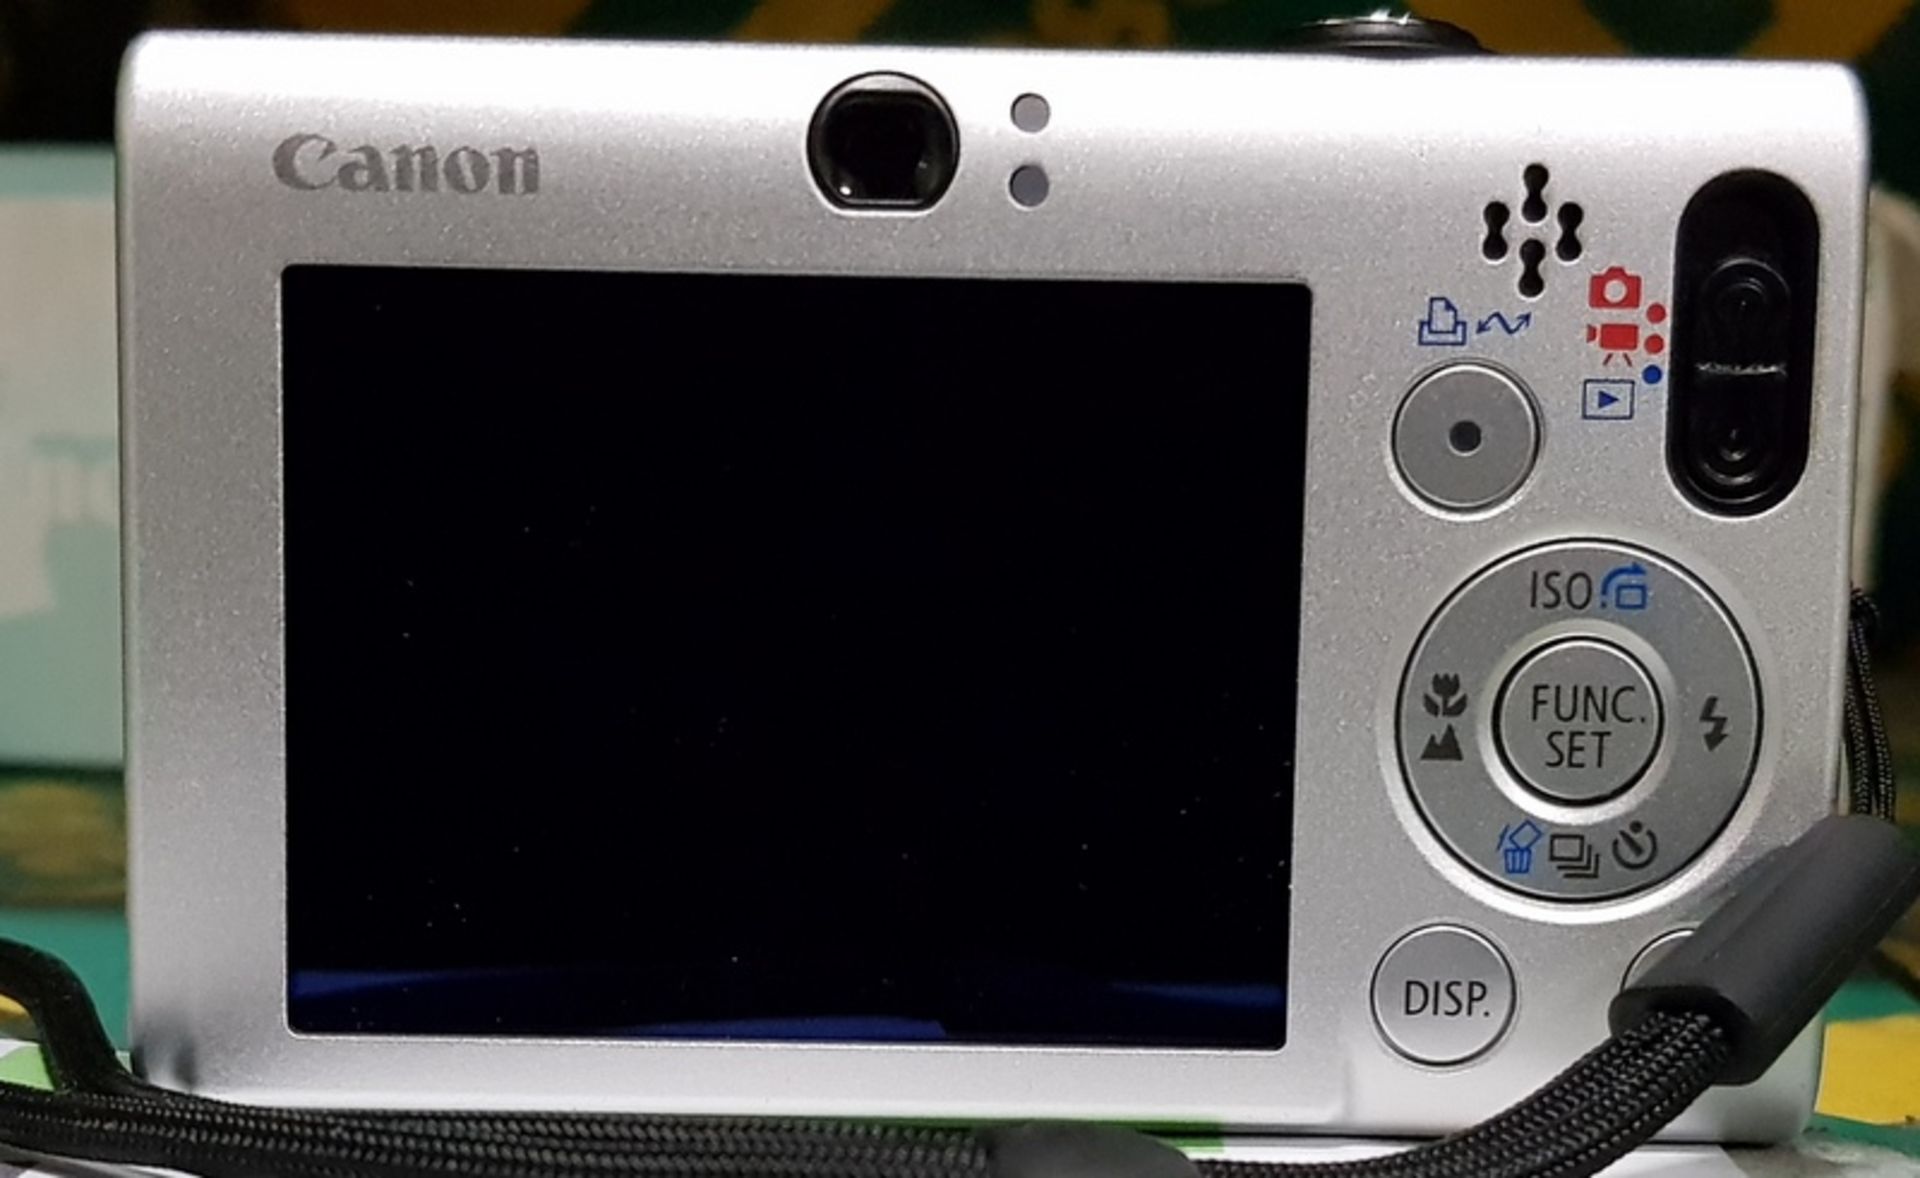 Canon IXUS 801S - Digital Camera - Image 3 of 3